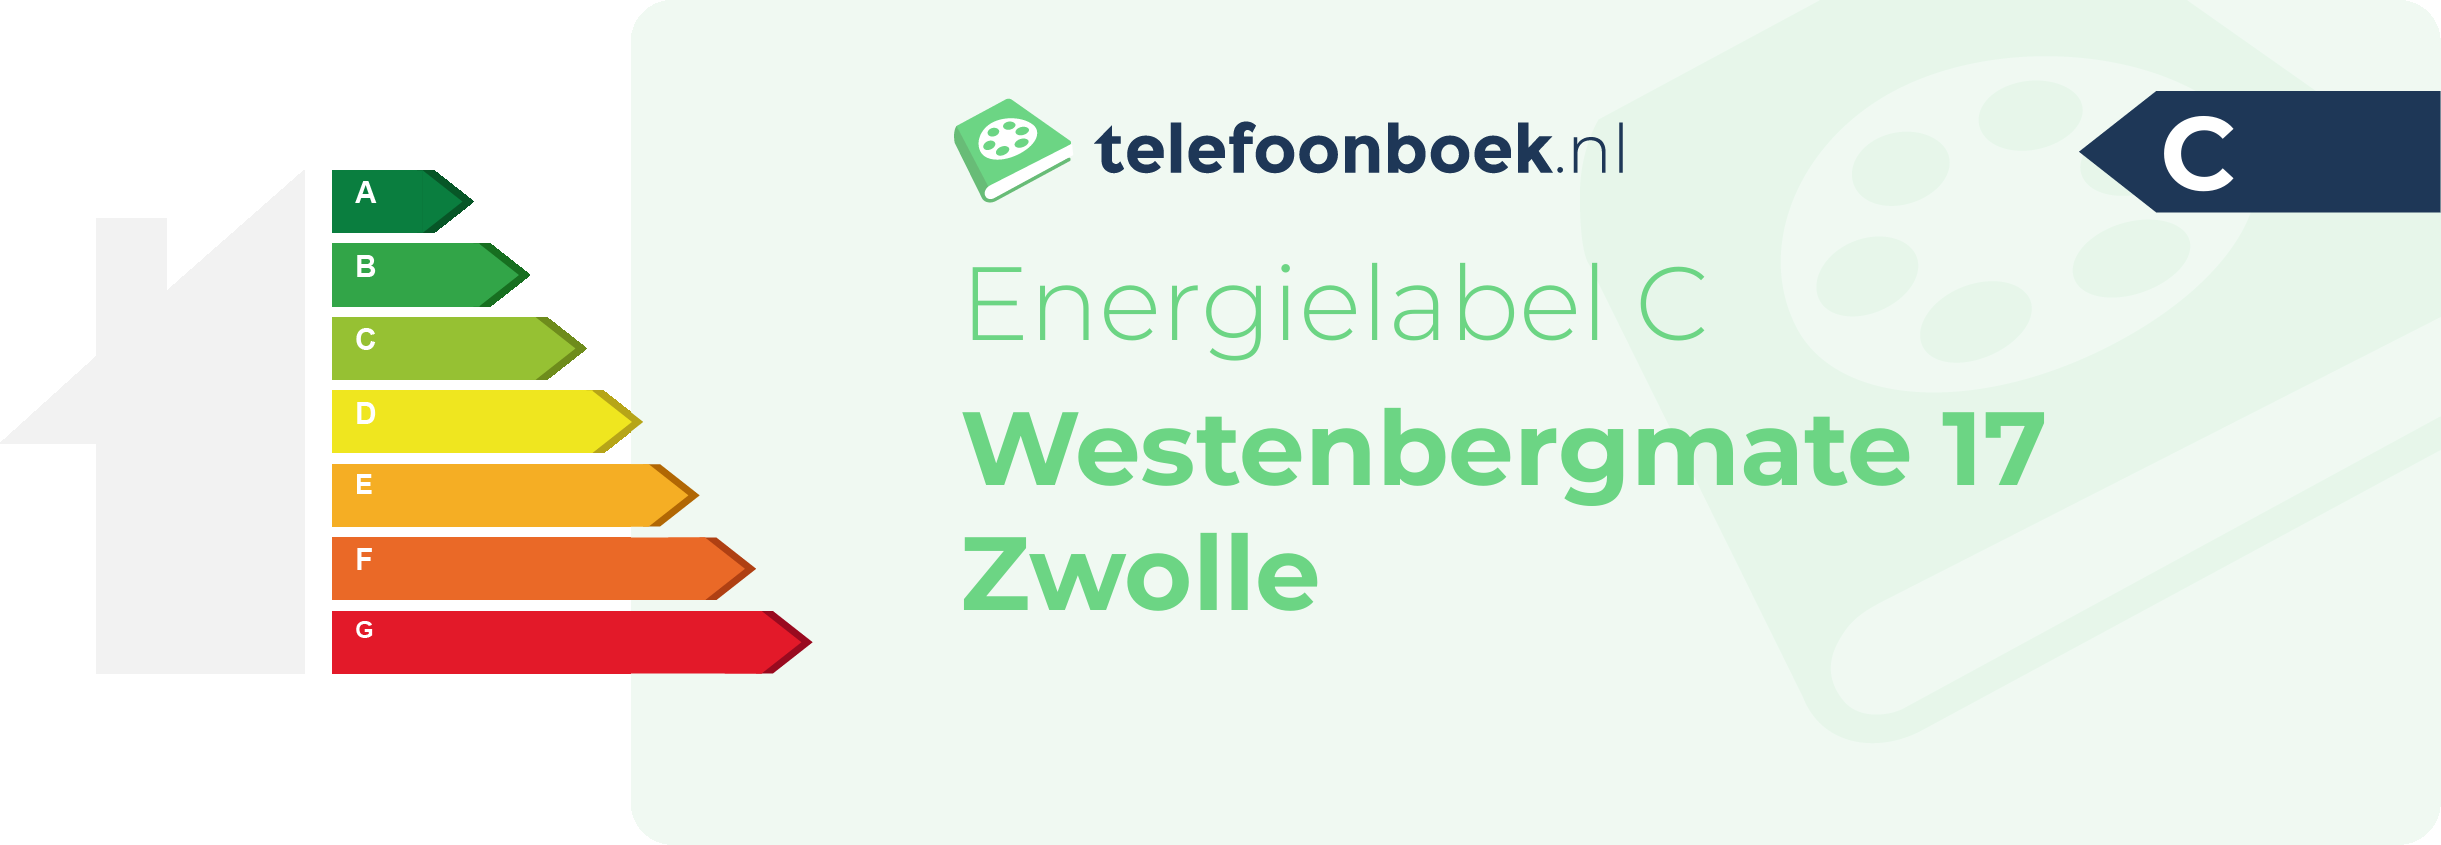 Energielabel Westenbergmate 17 Zwolle